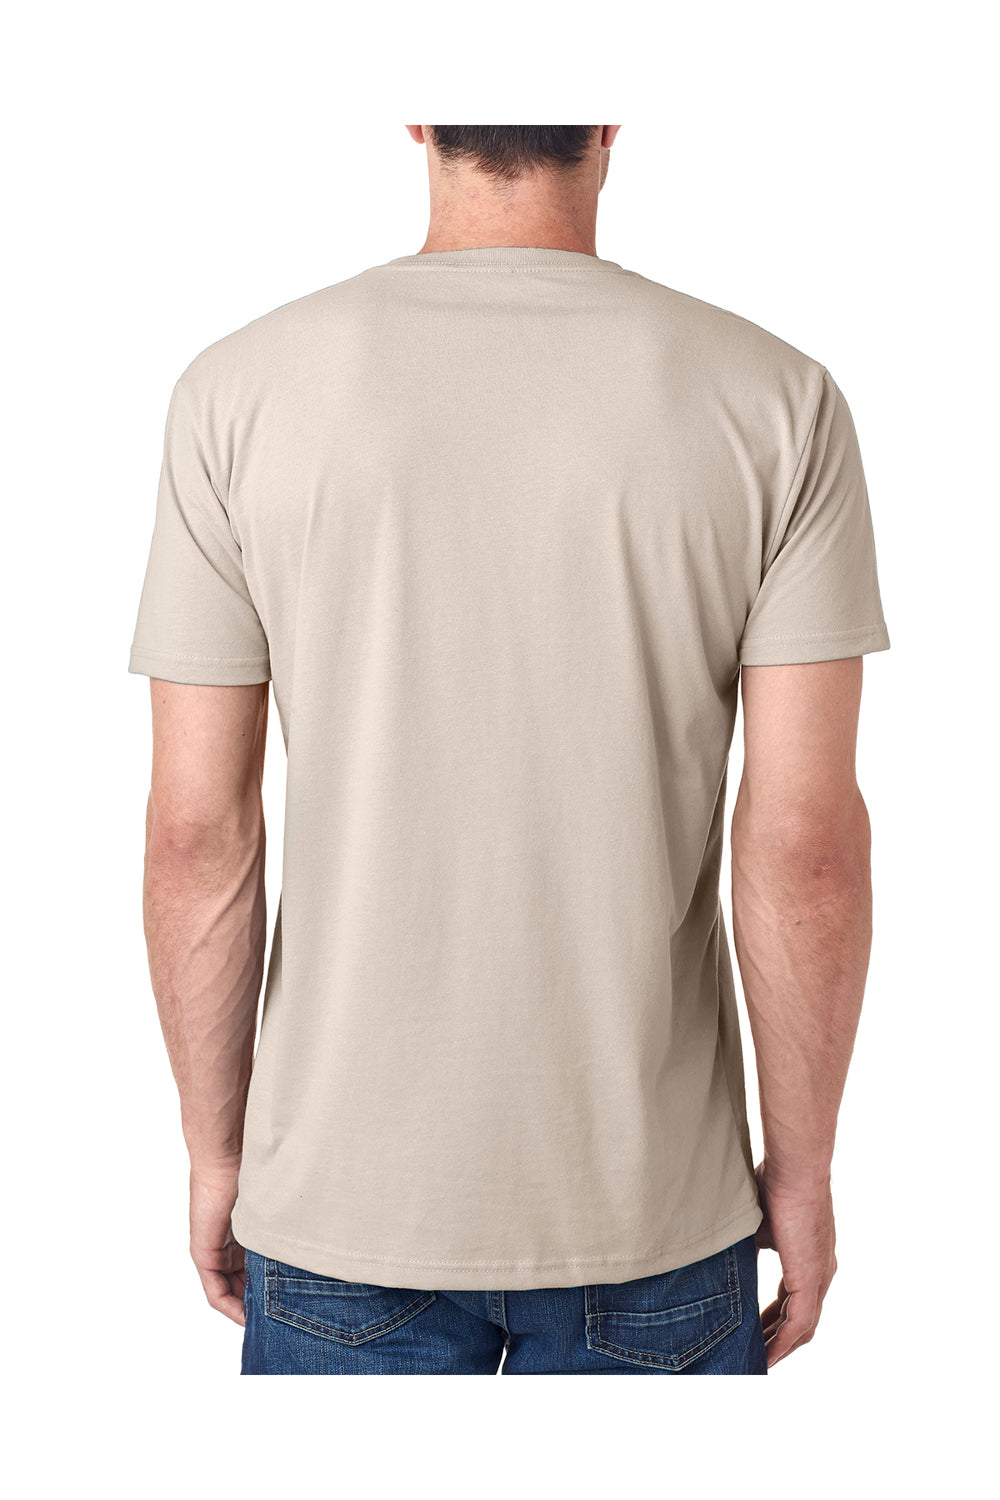 Next Level 6440 Mens Sueded Jersey Short Sleeve V-Neck T-Shirt Sand Brown Back